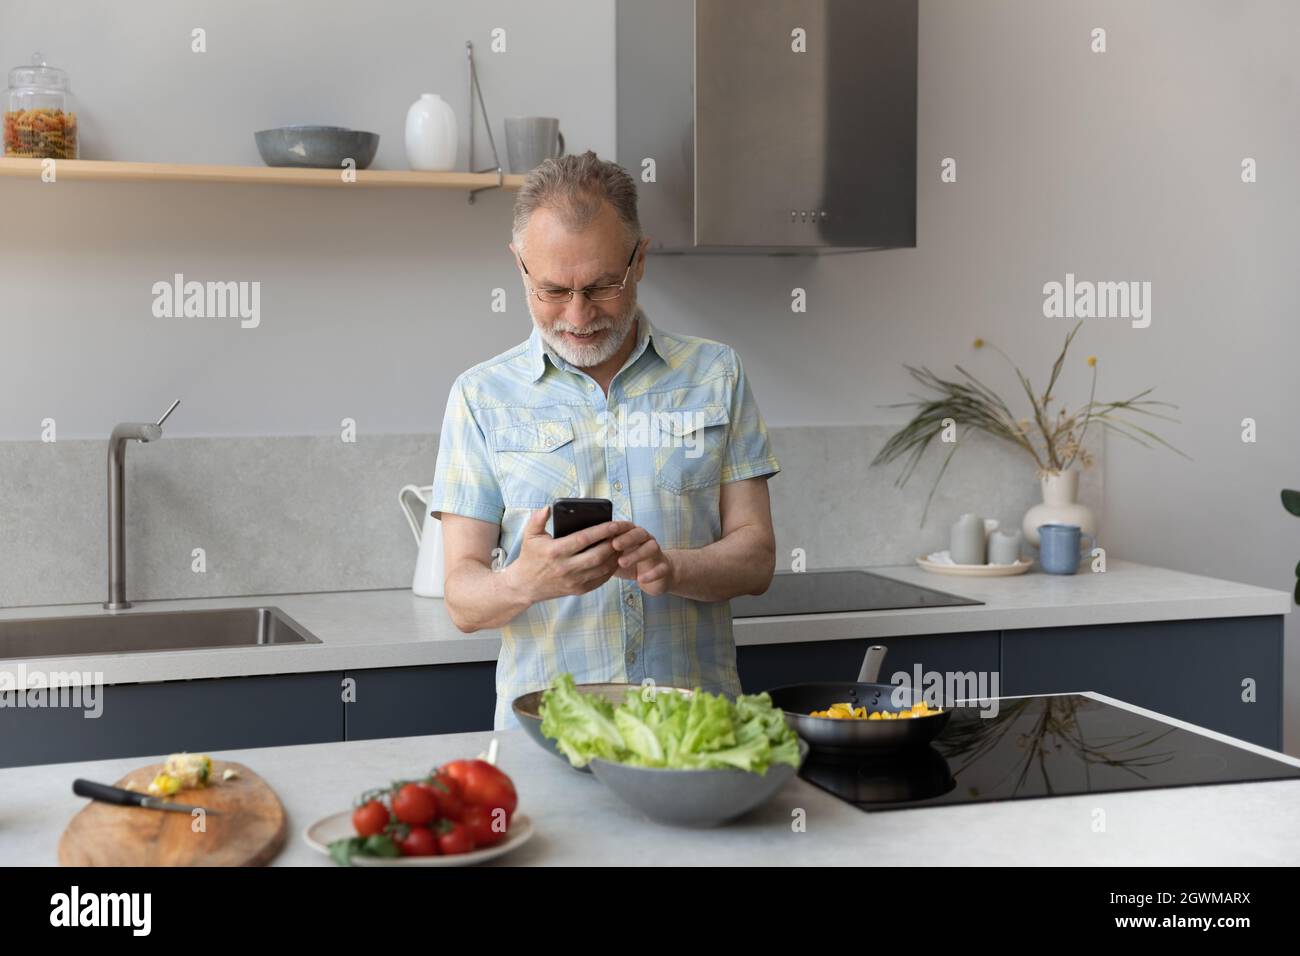 Joyful older mature man using cellphone, preparing food. Stock Photo